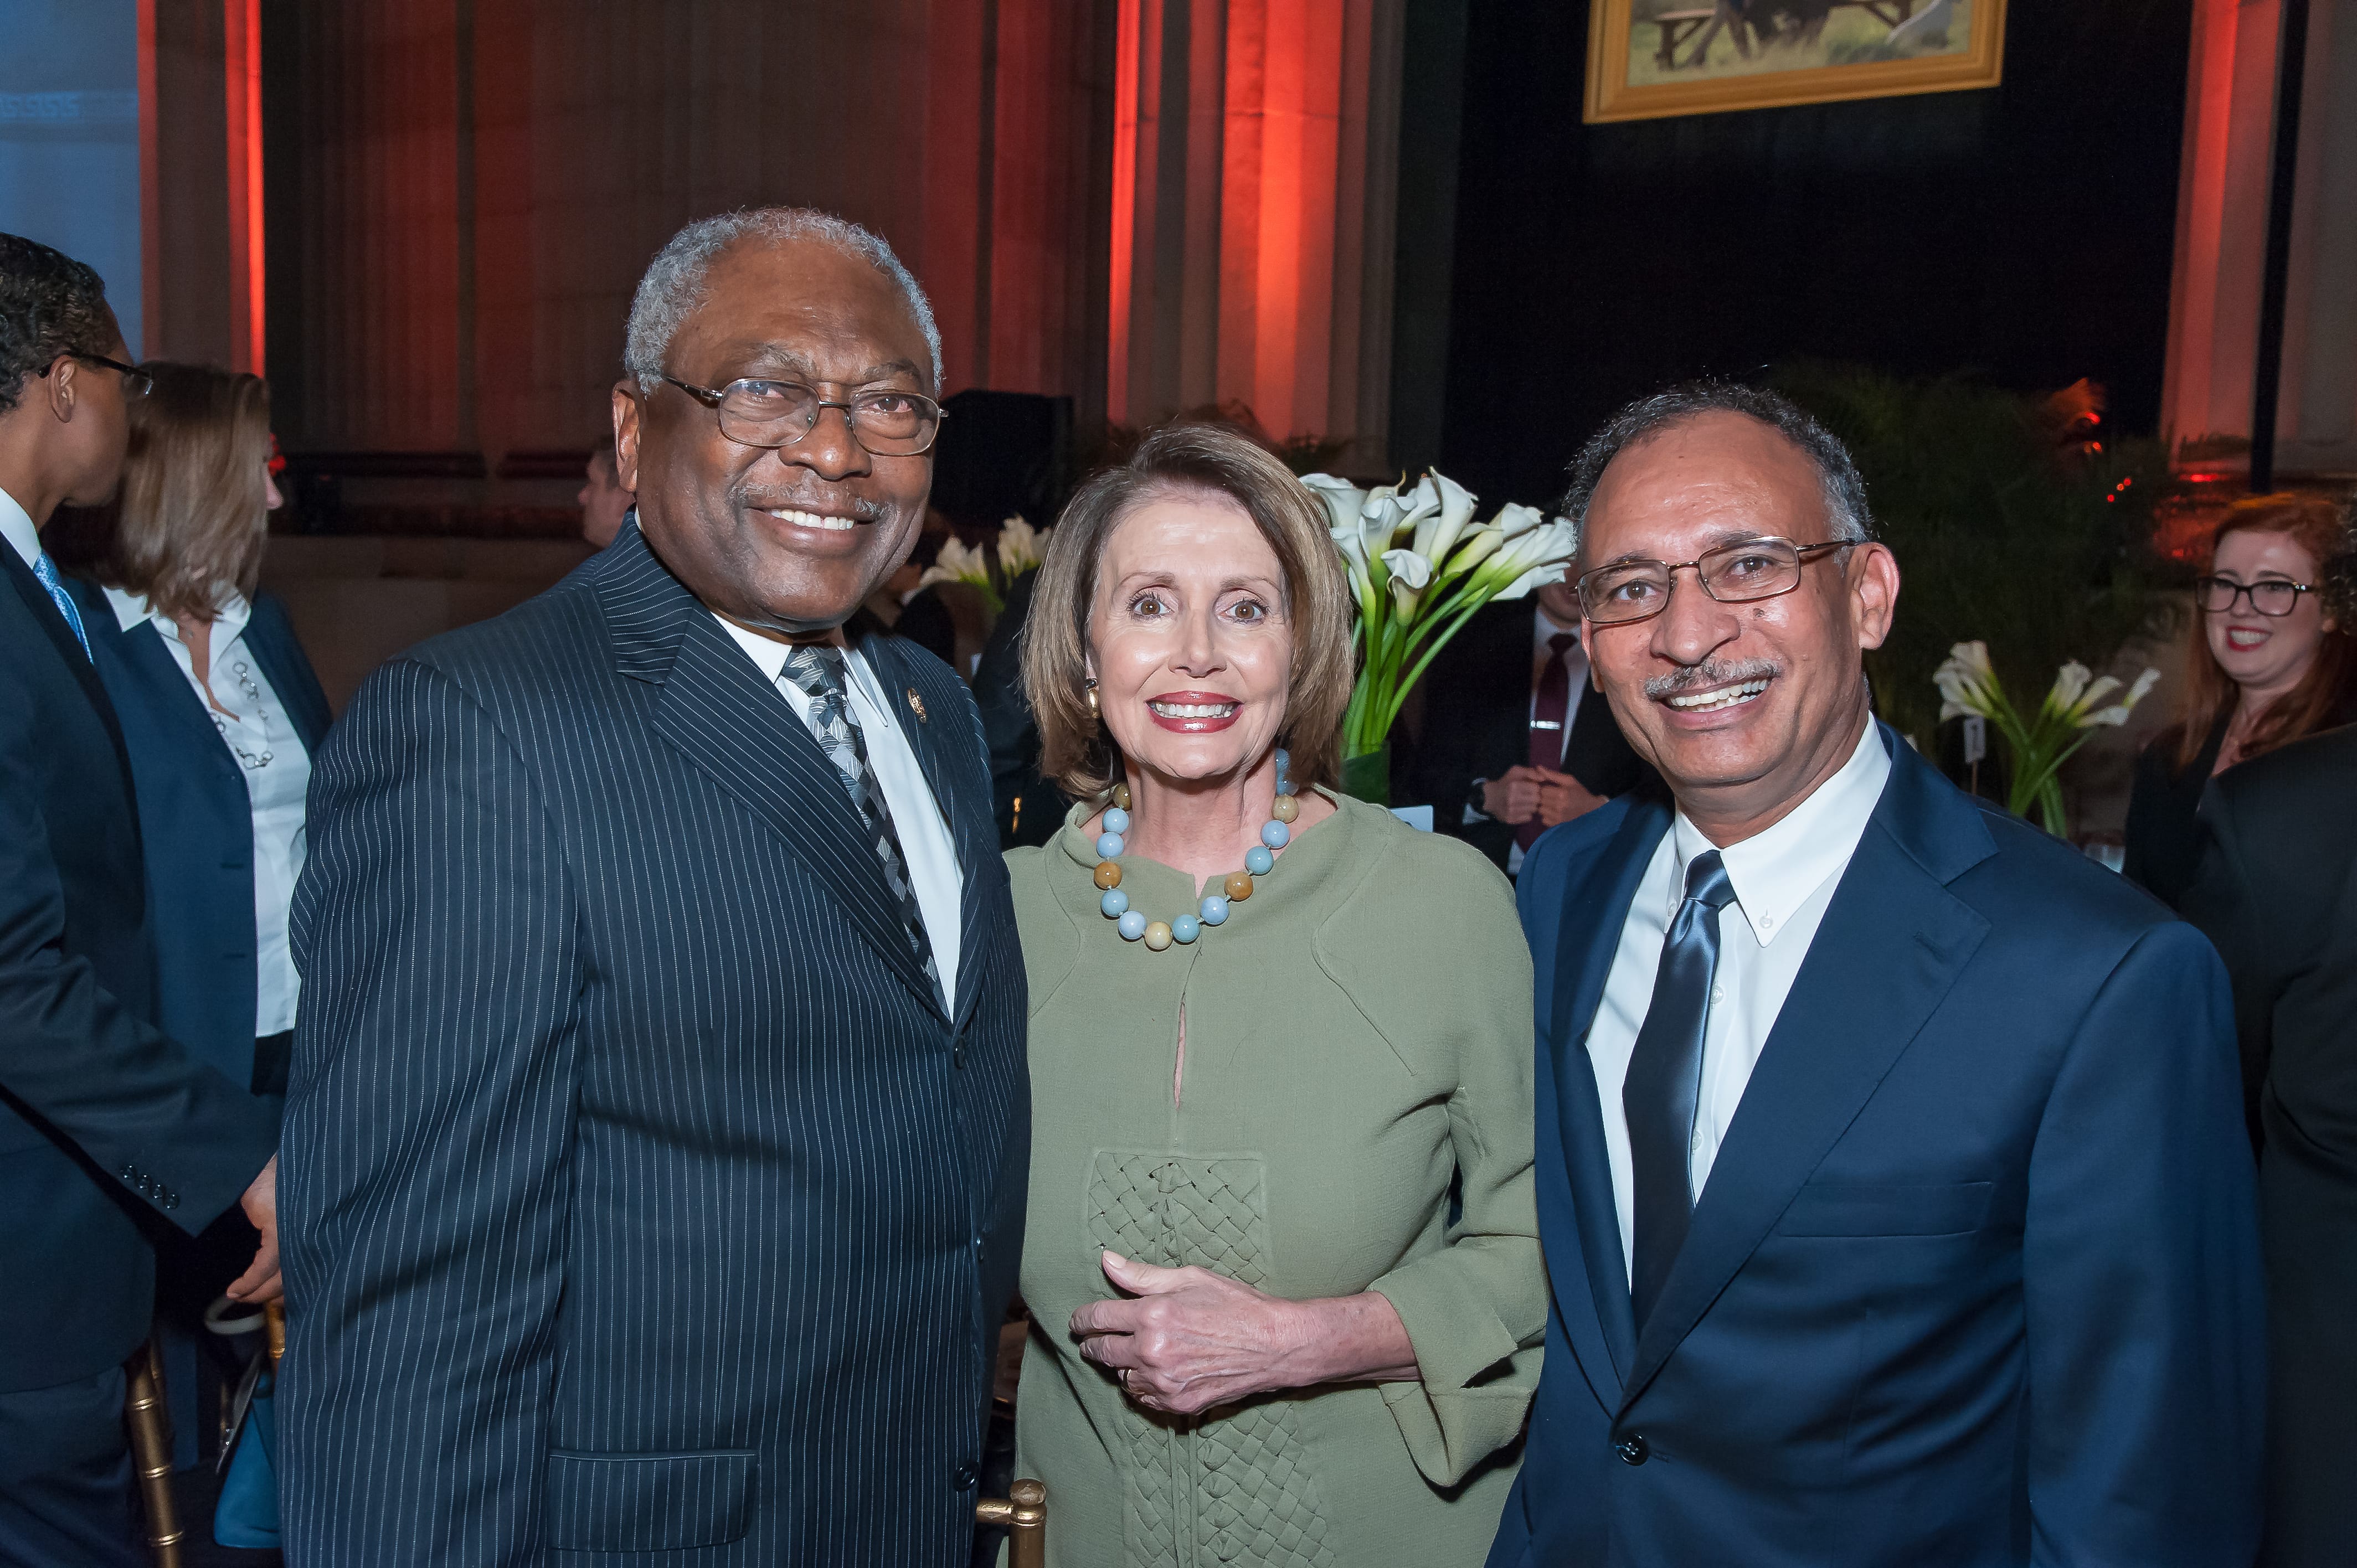 L-R: Congressman James Clyburn, Congresswoman Nancy Pelosi, and unknown. Photo by Tony Powell, 2015.